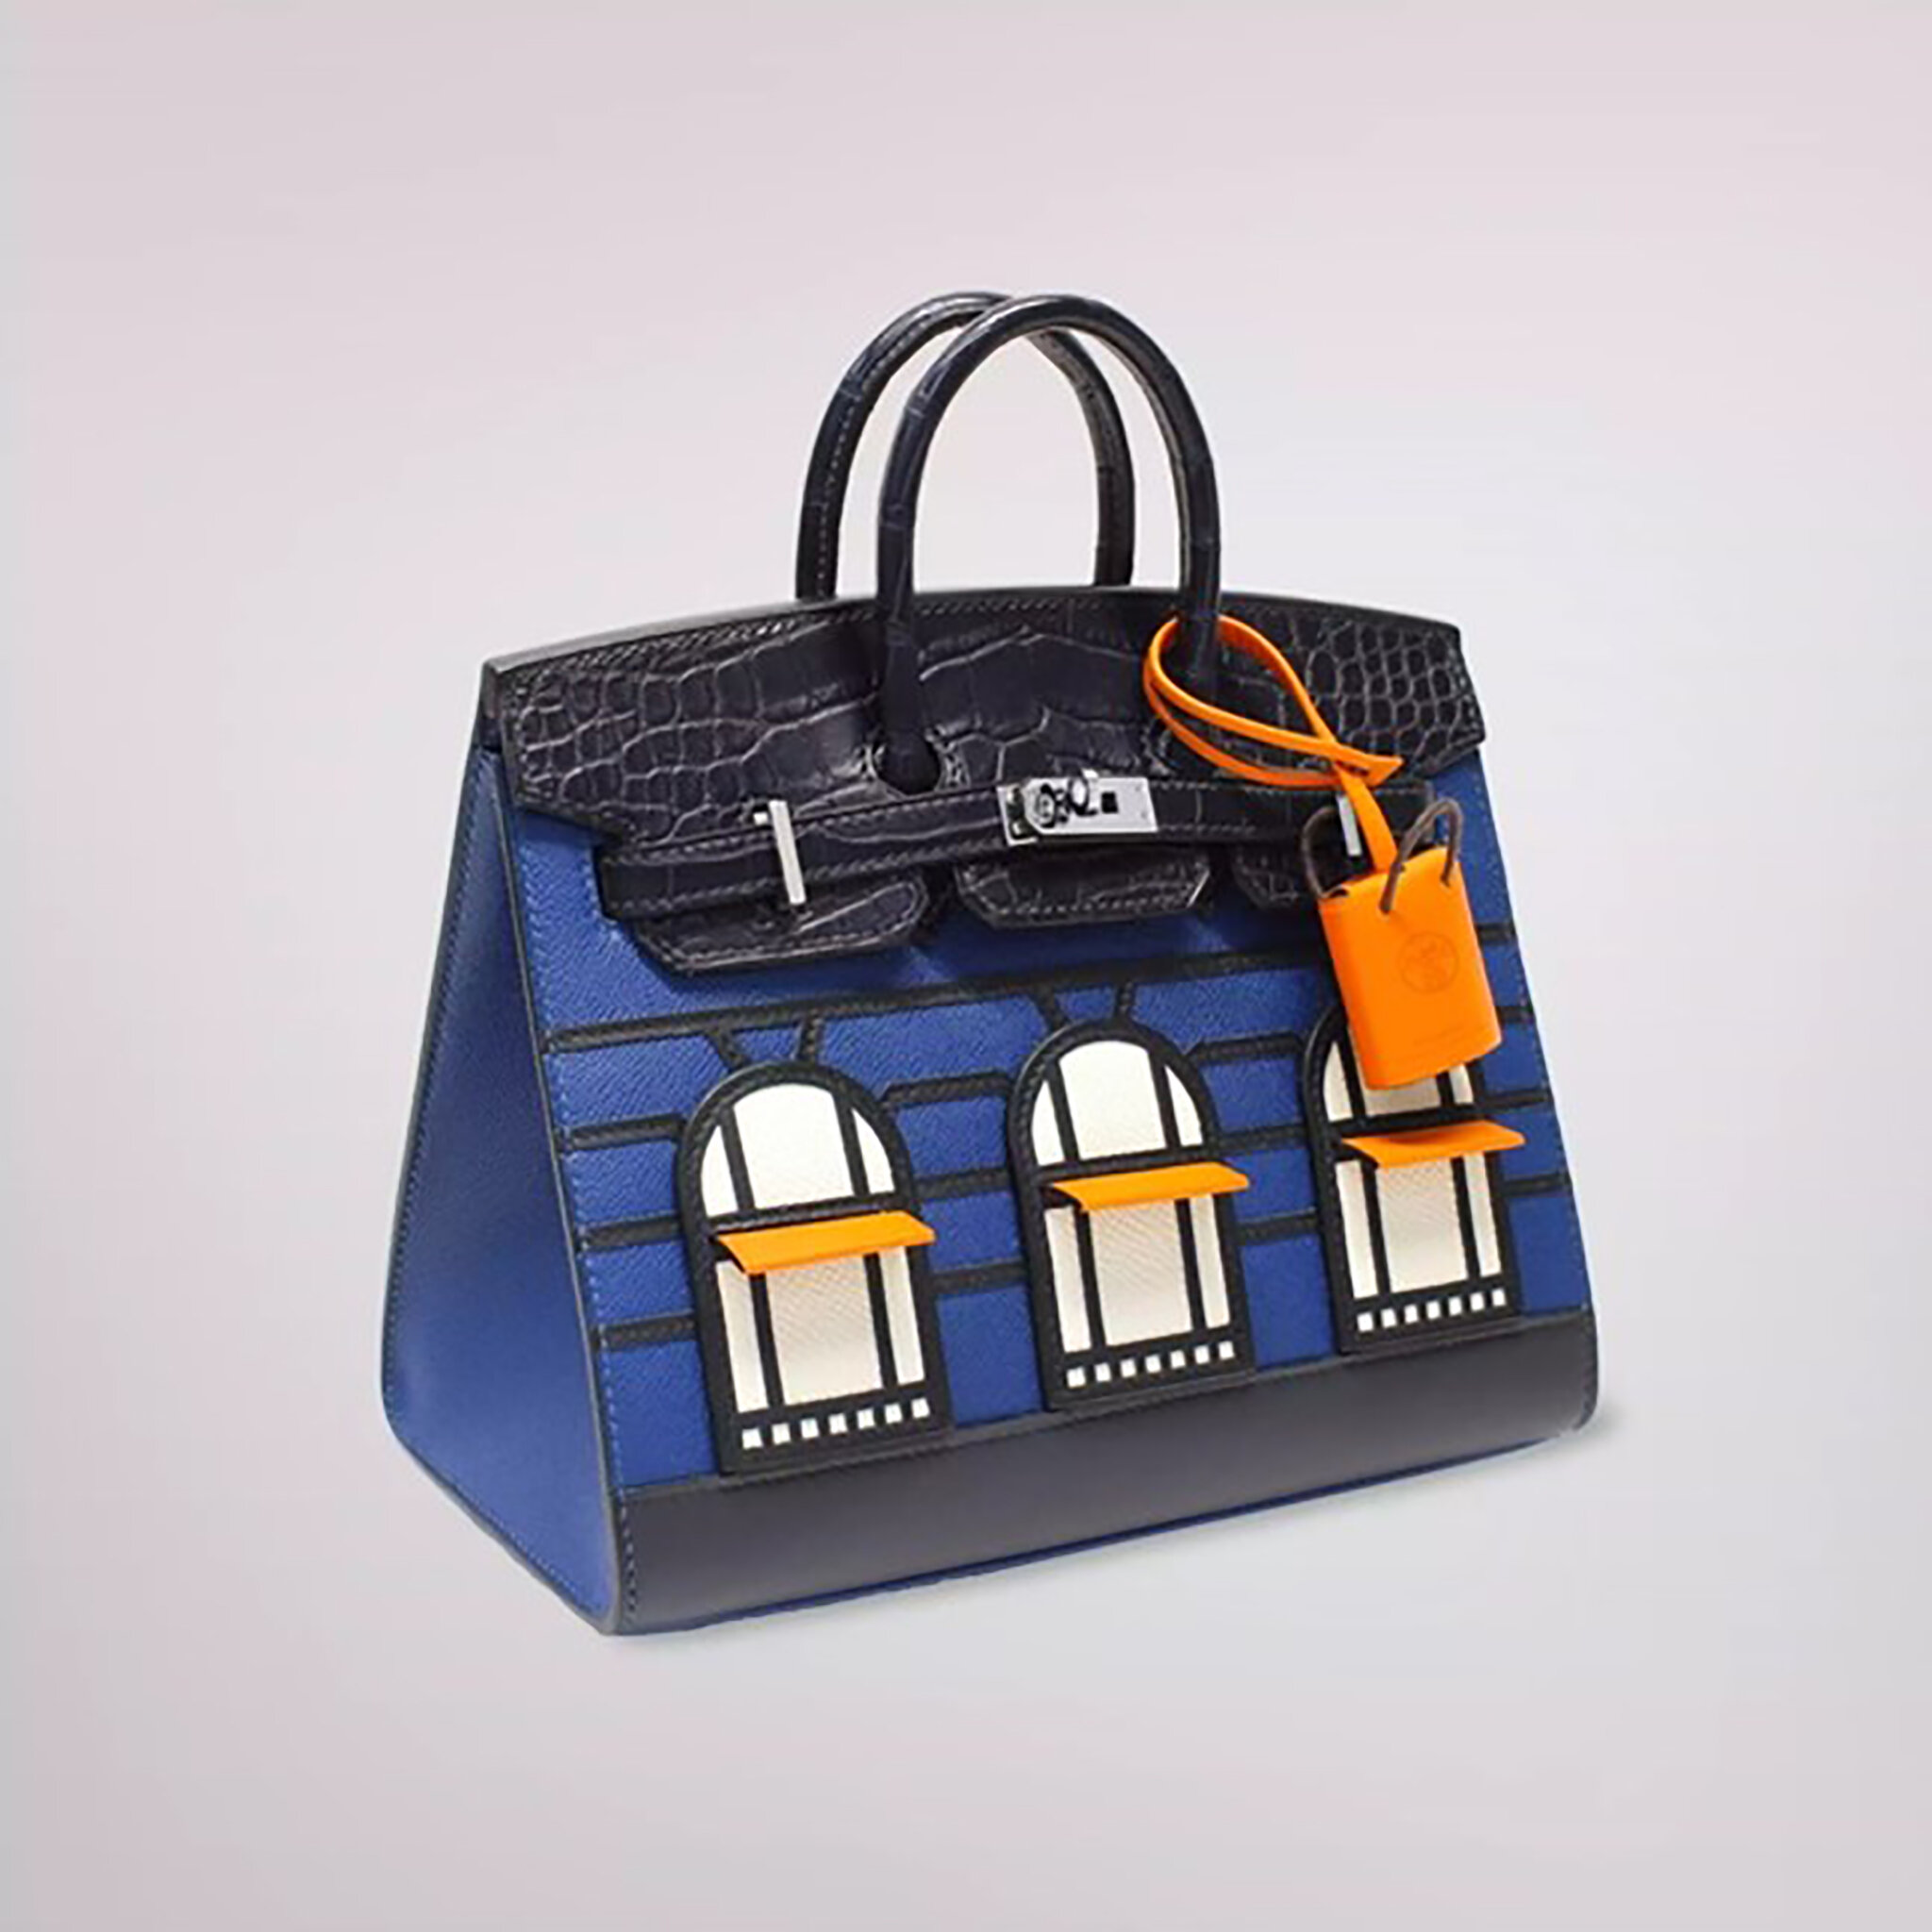 History behind the hype: Hermès Birkin bags